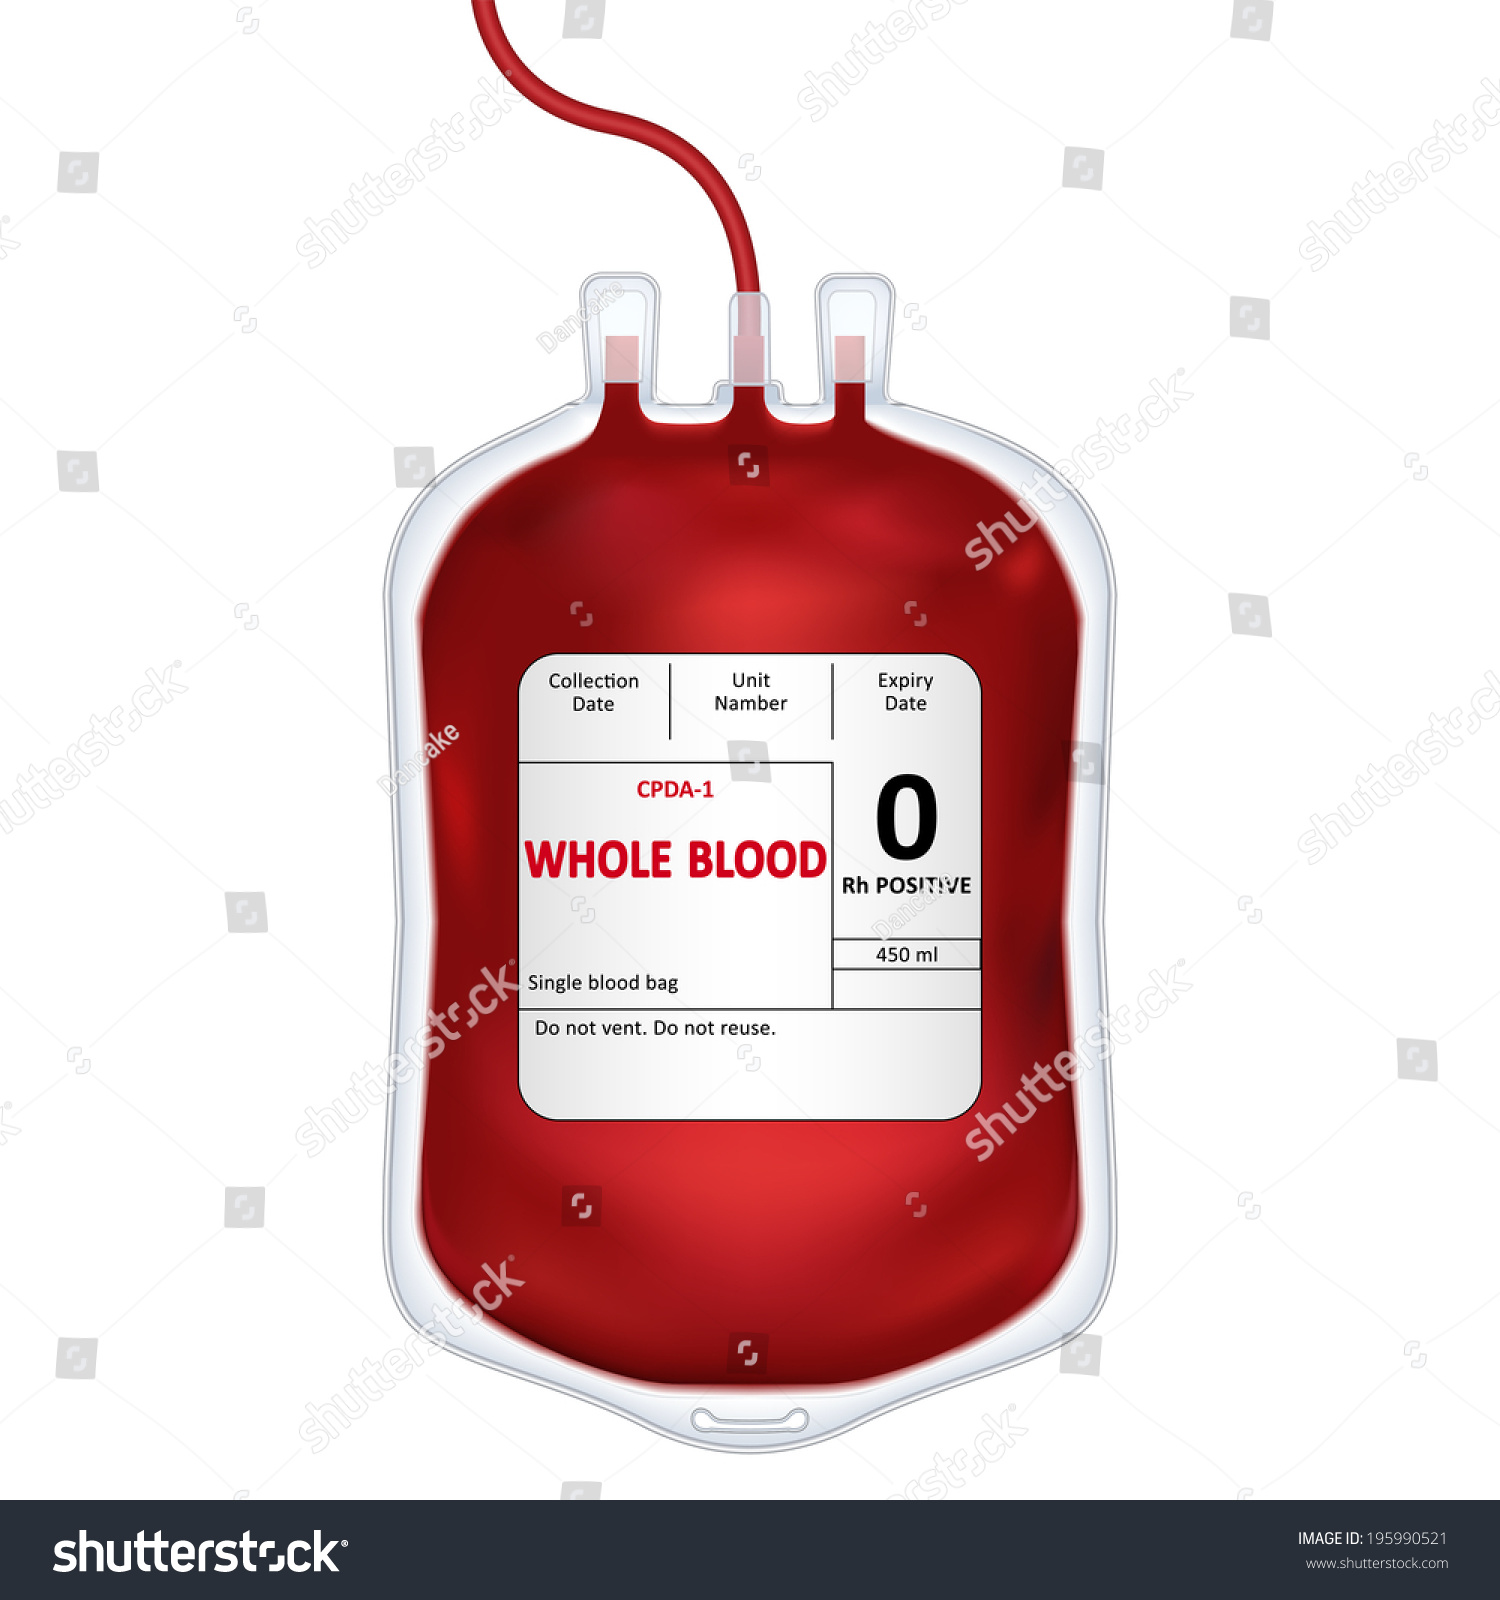 clipart blood transfusion - photo #28